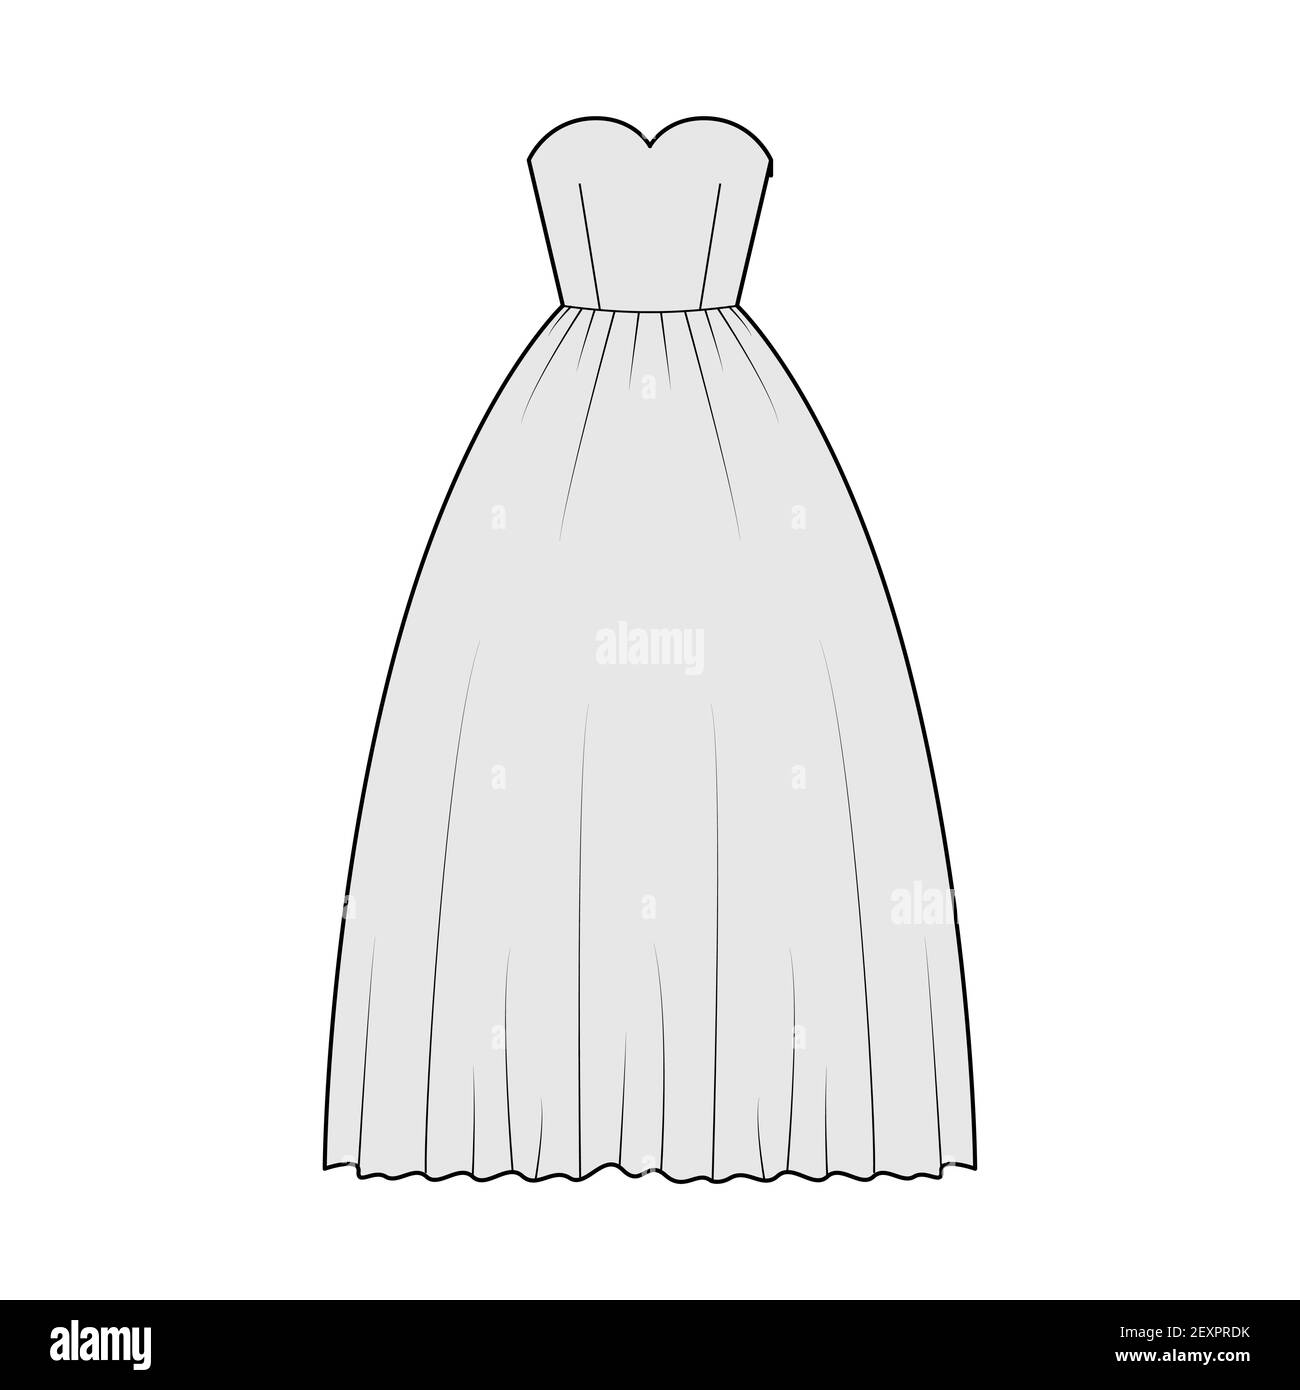 Crinoline dress technical fashion illustration with strapless ...